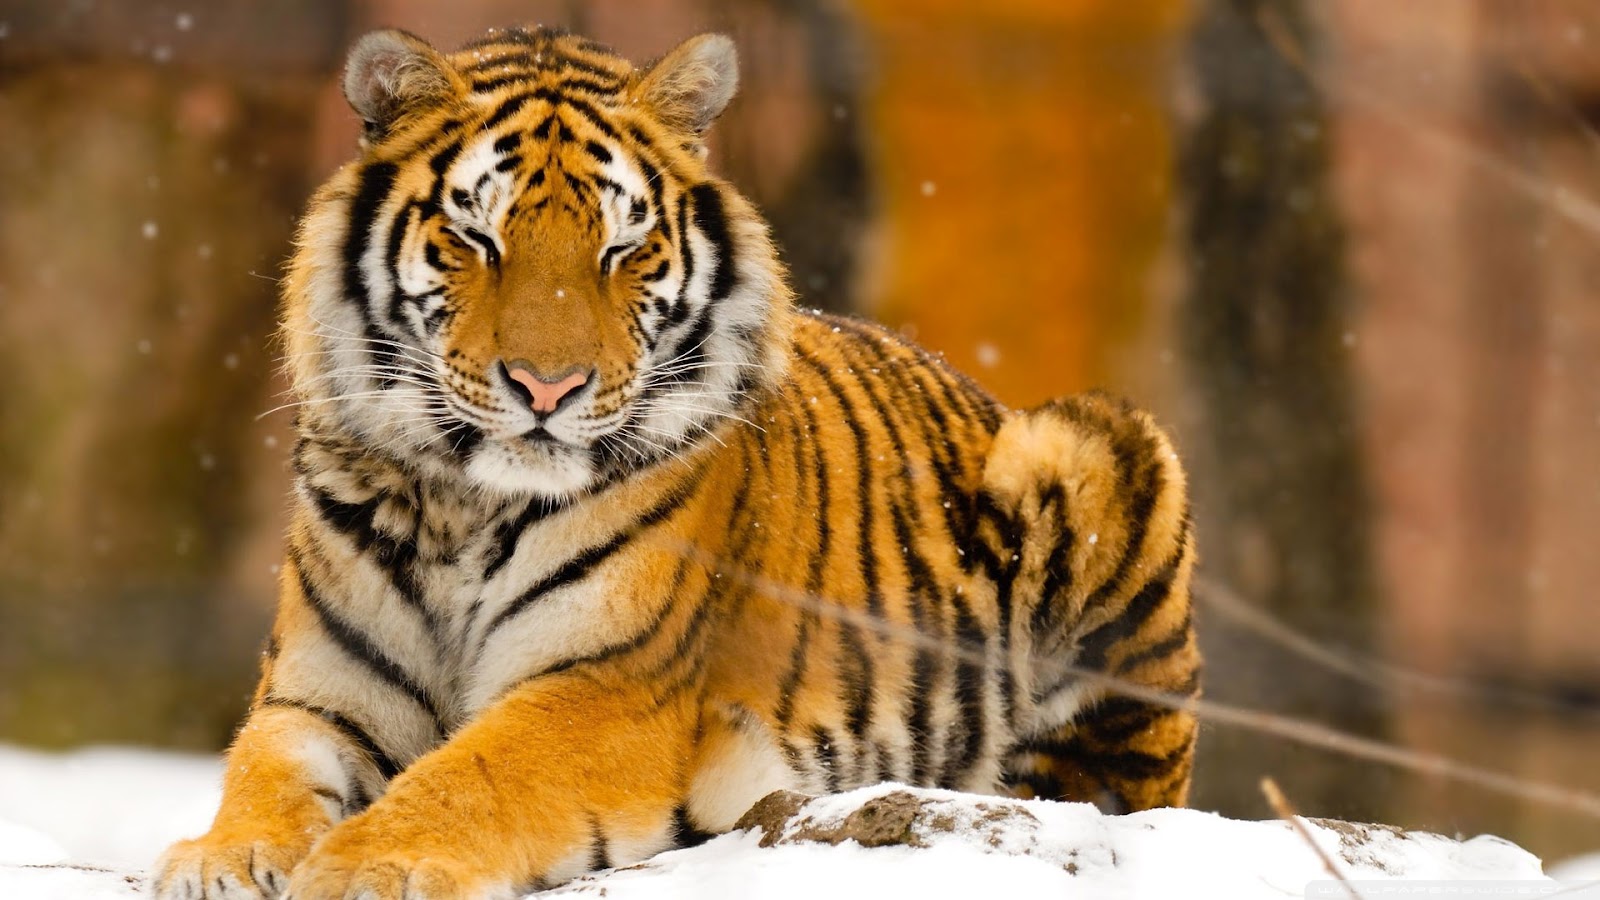 Beautiful Tiger Image 2015 Hd Background Wallpaper 22 Thumb